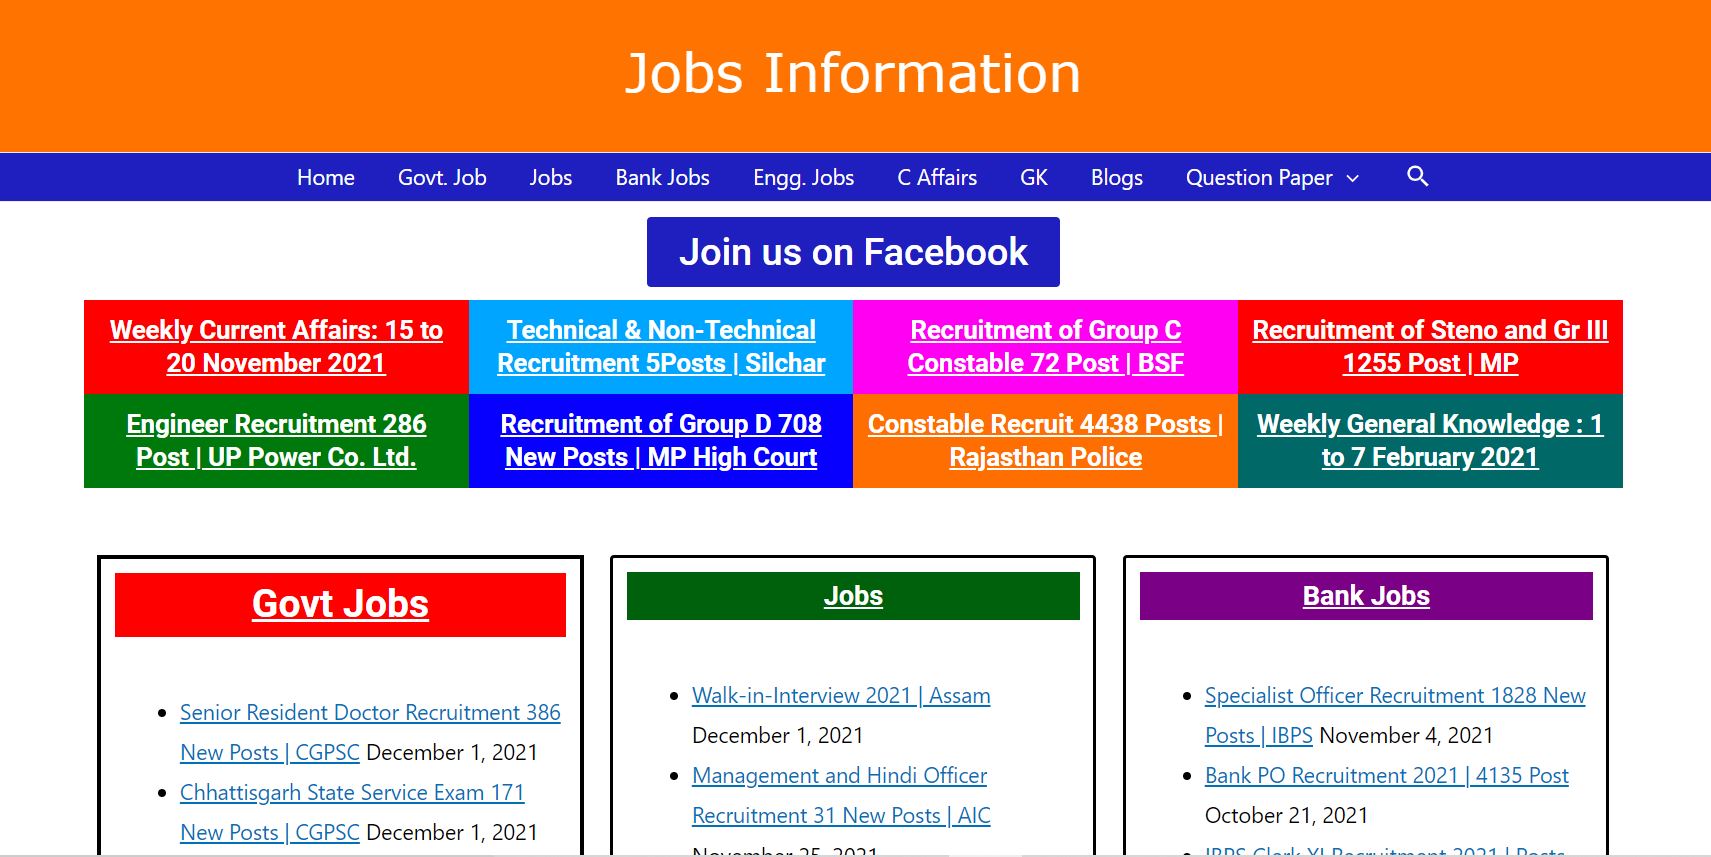 Jobs Information